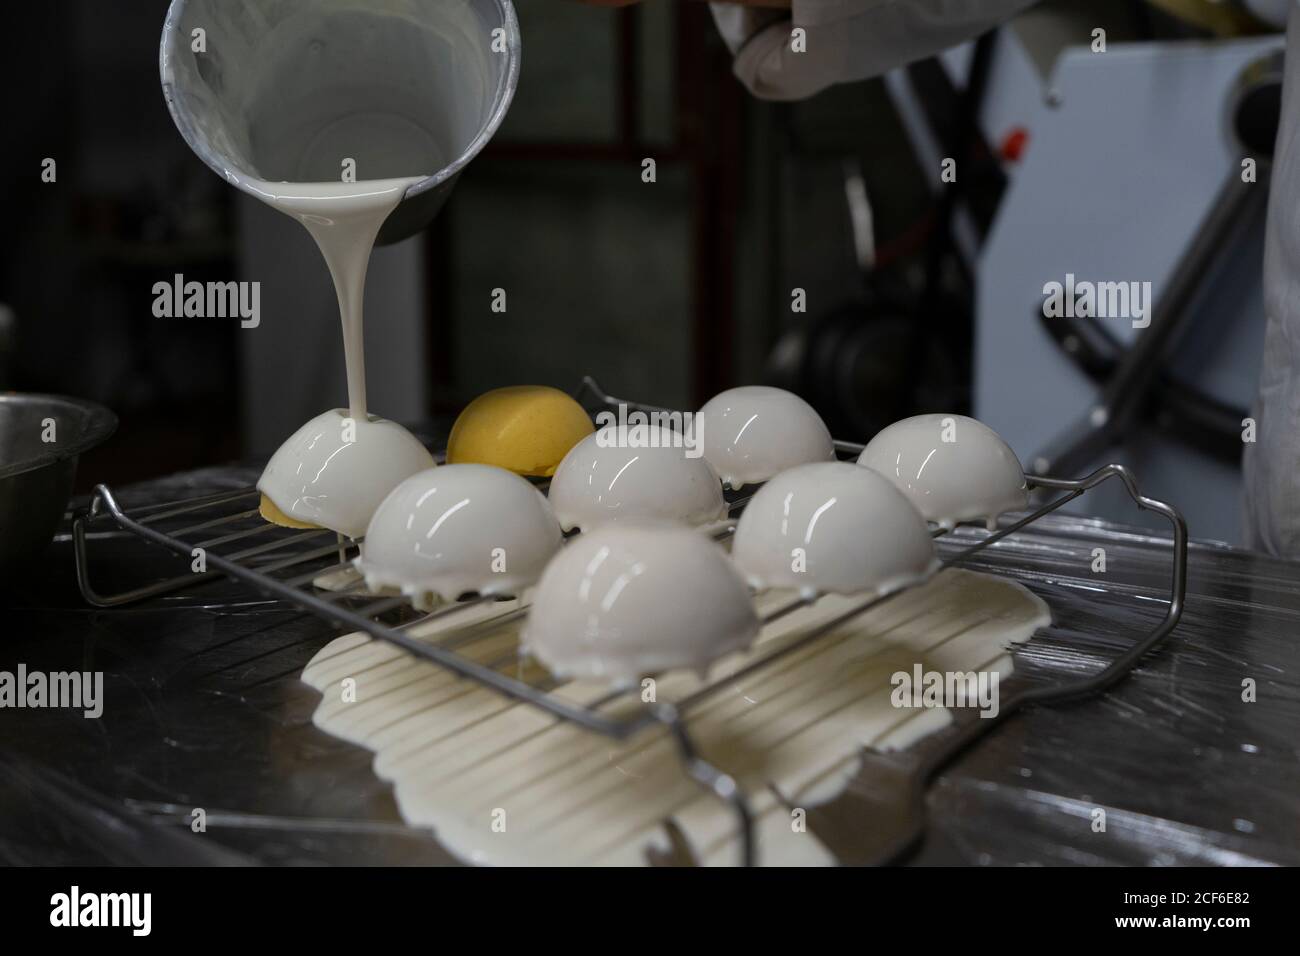 Crop person pouring white mirror glaze on tasty yellow mousse cakes arranged on metal grid in kitchen Stock Photo